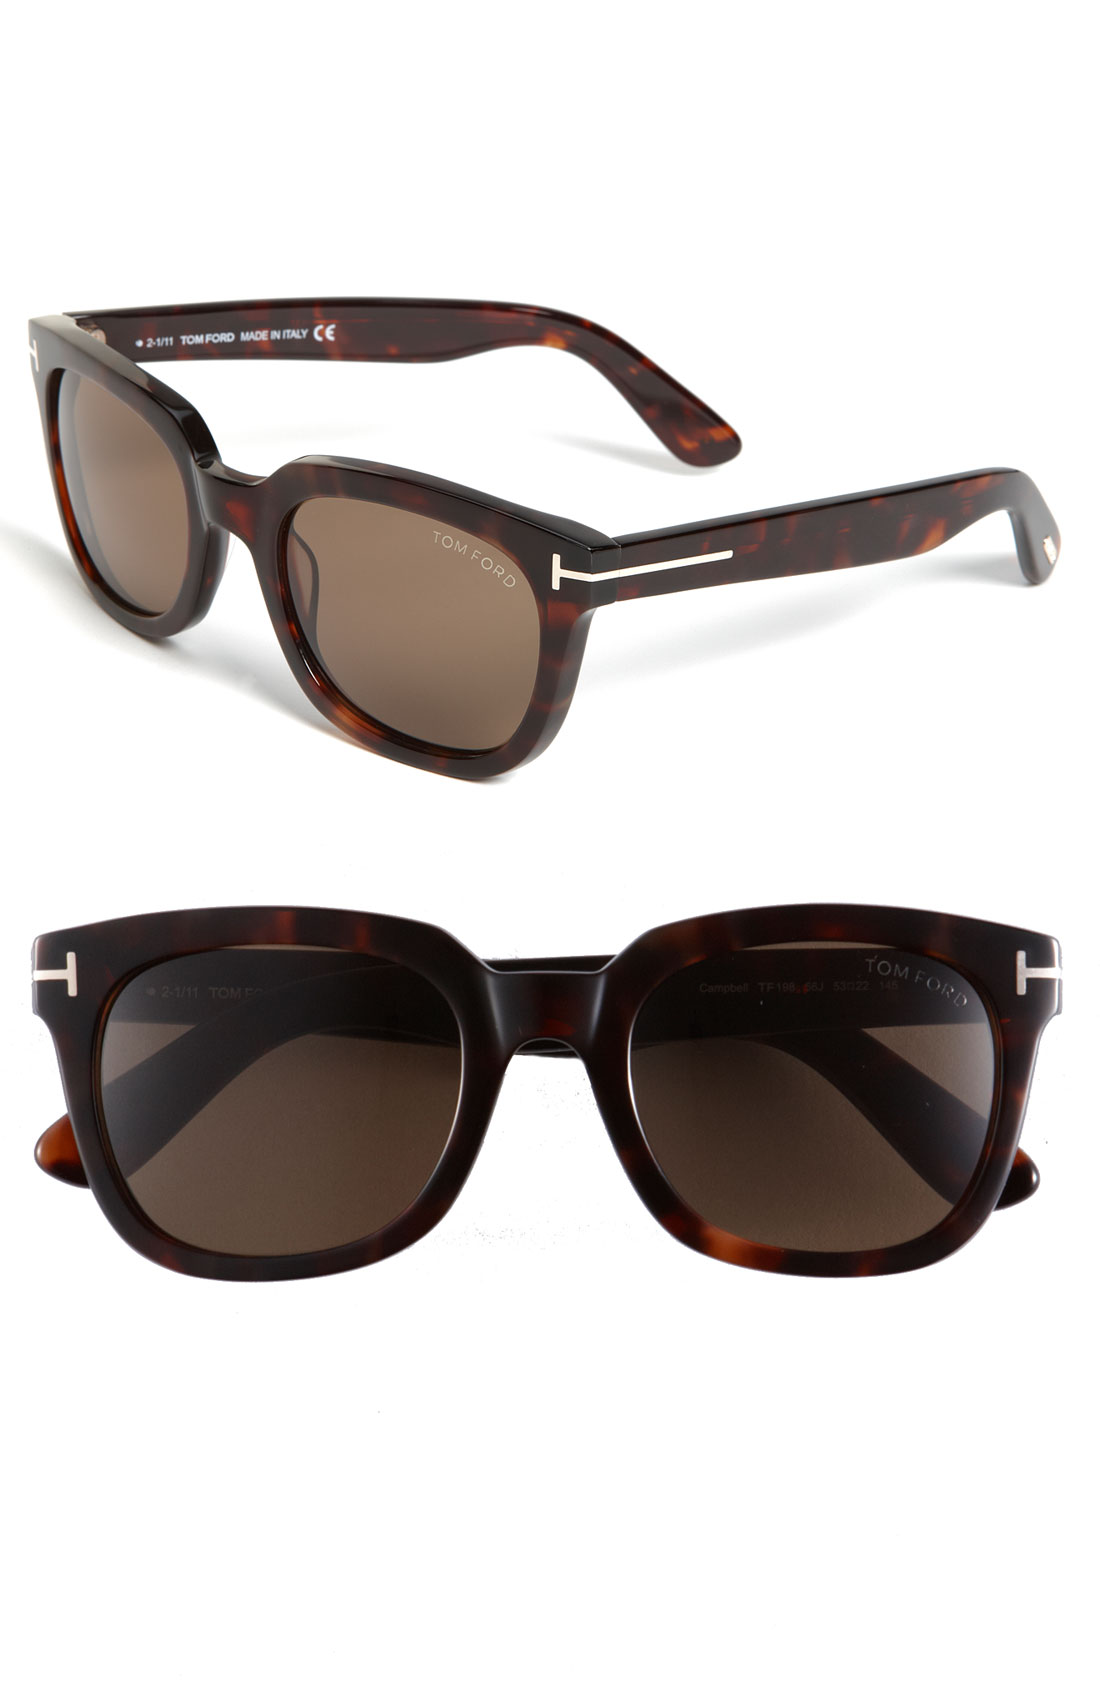 Tom Ford 'Campbell' 53Mm Sunglasses Shiny Dark Havana in Brown (Shiny